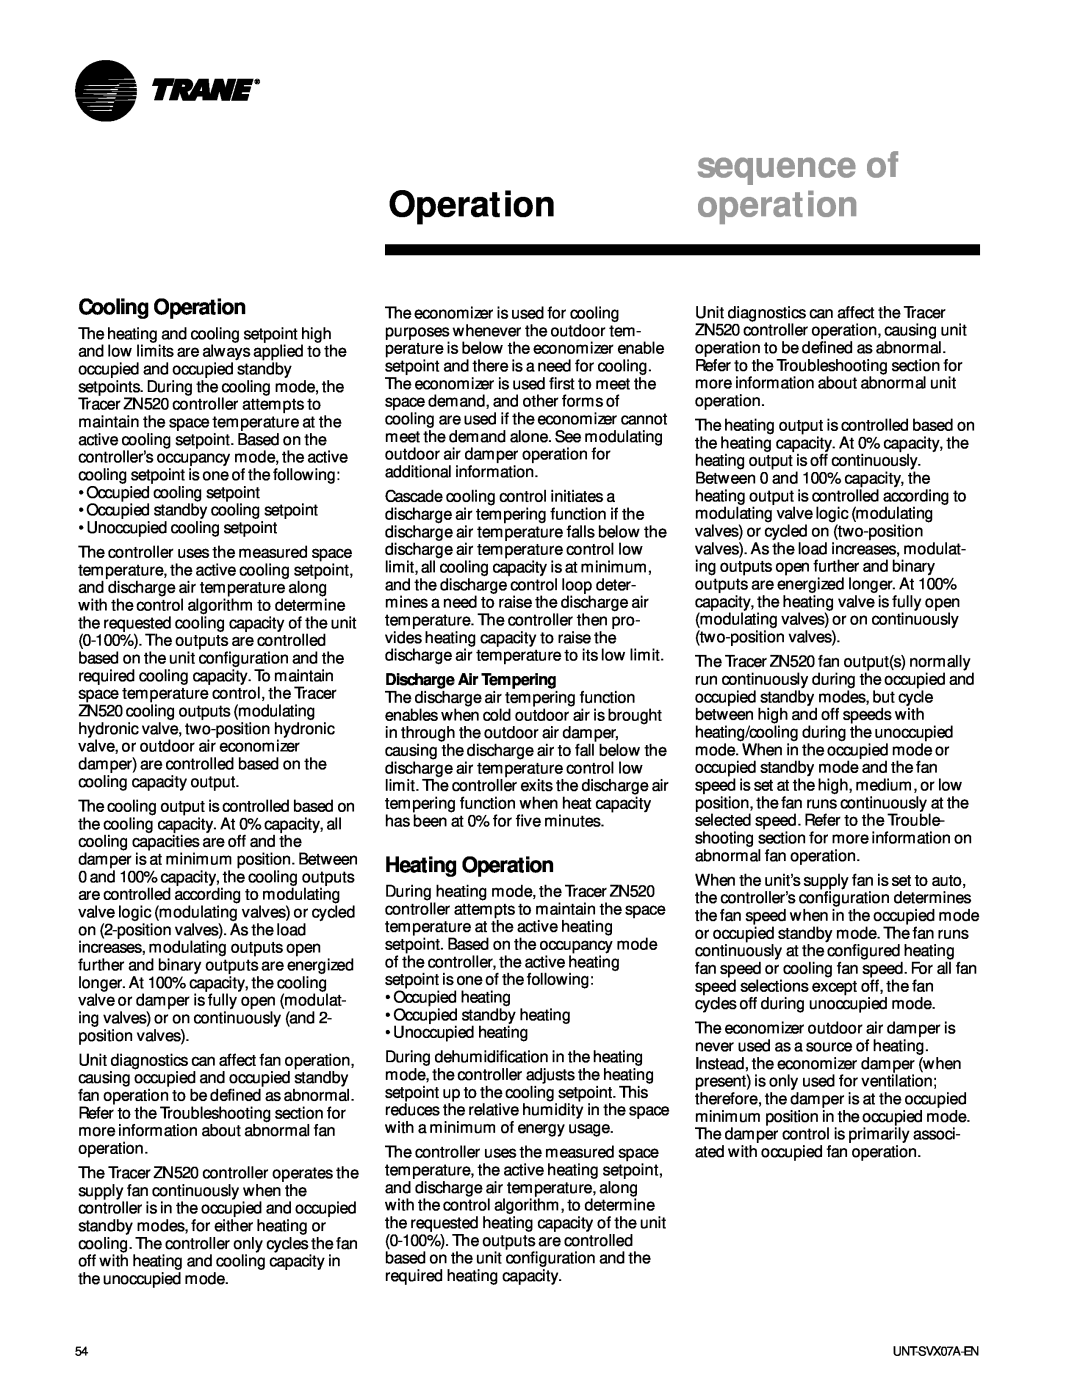 Trane UNT-SVX07A-EN manual Cooling Operation, Heating Operation, sequence of, Operation operation, Discharge Air Tempering 